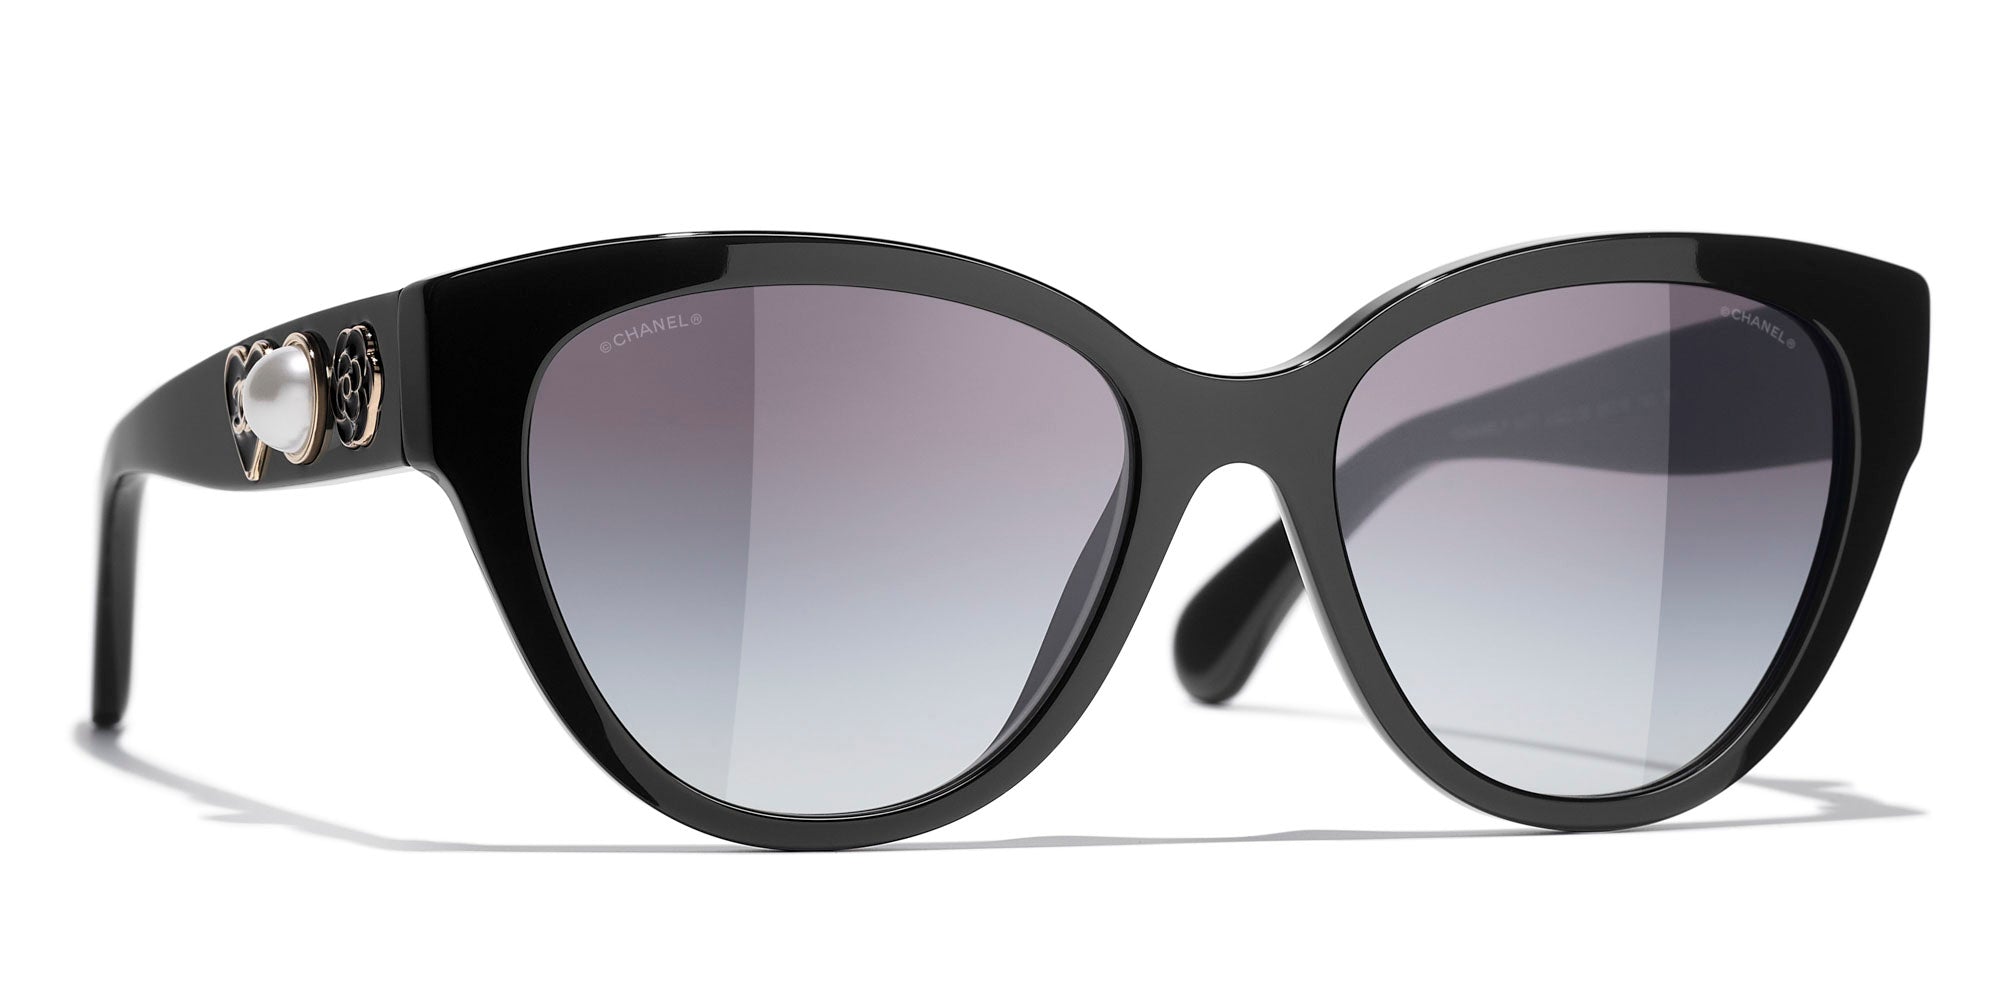 CHANEL 5477 Butterfly Acetate Sunglasses (Women) – F/E – Fashion